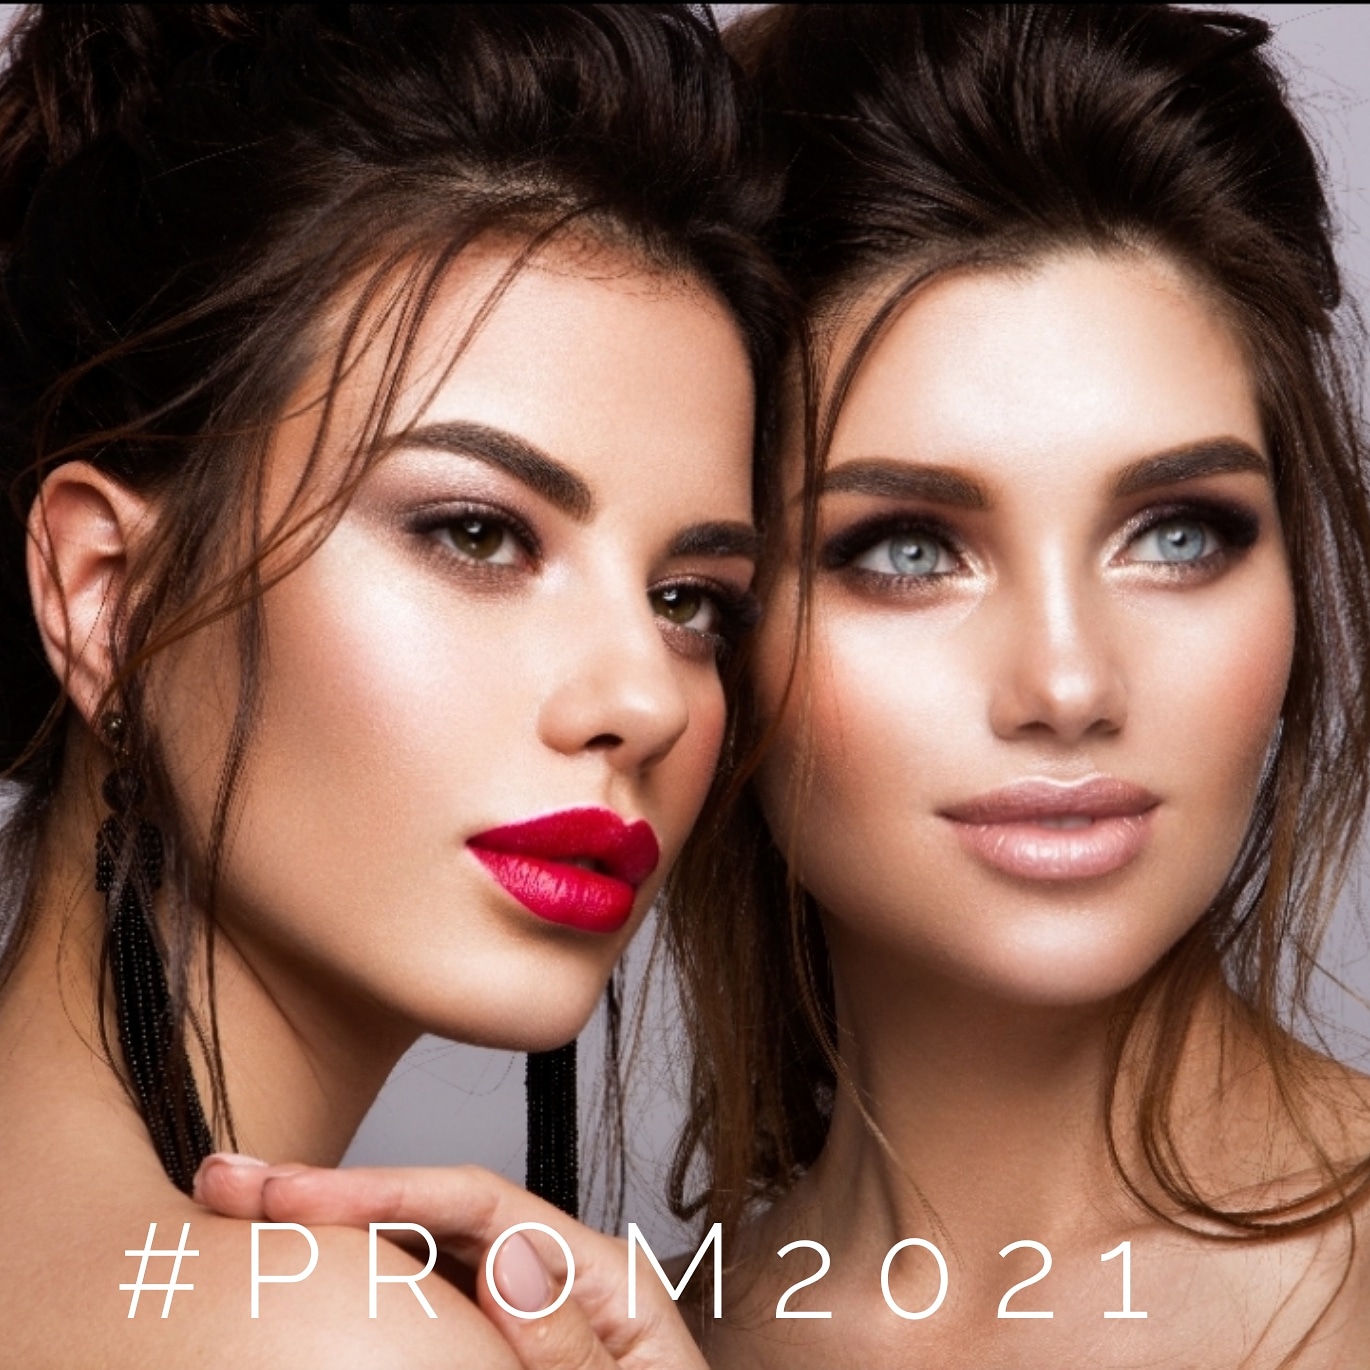 Girls Prom 2021